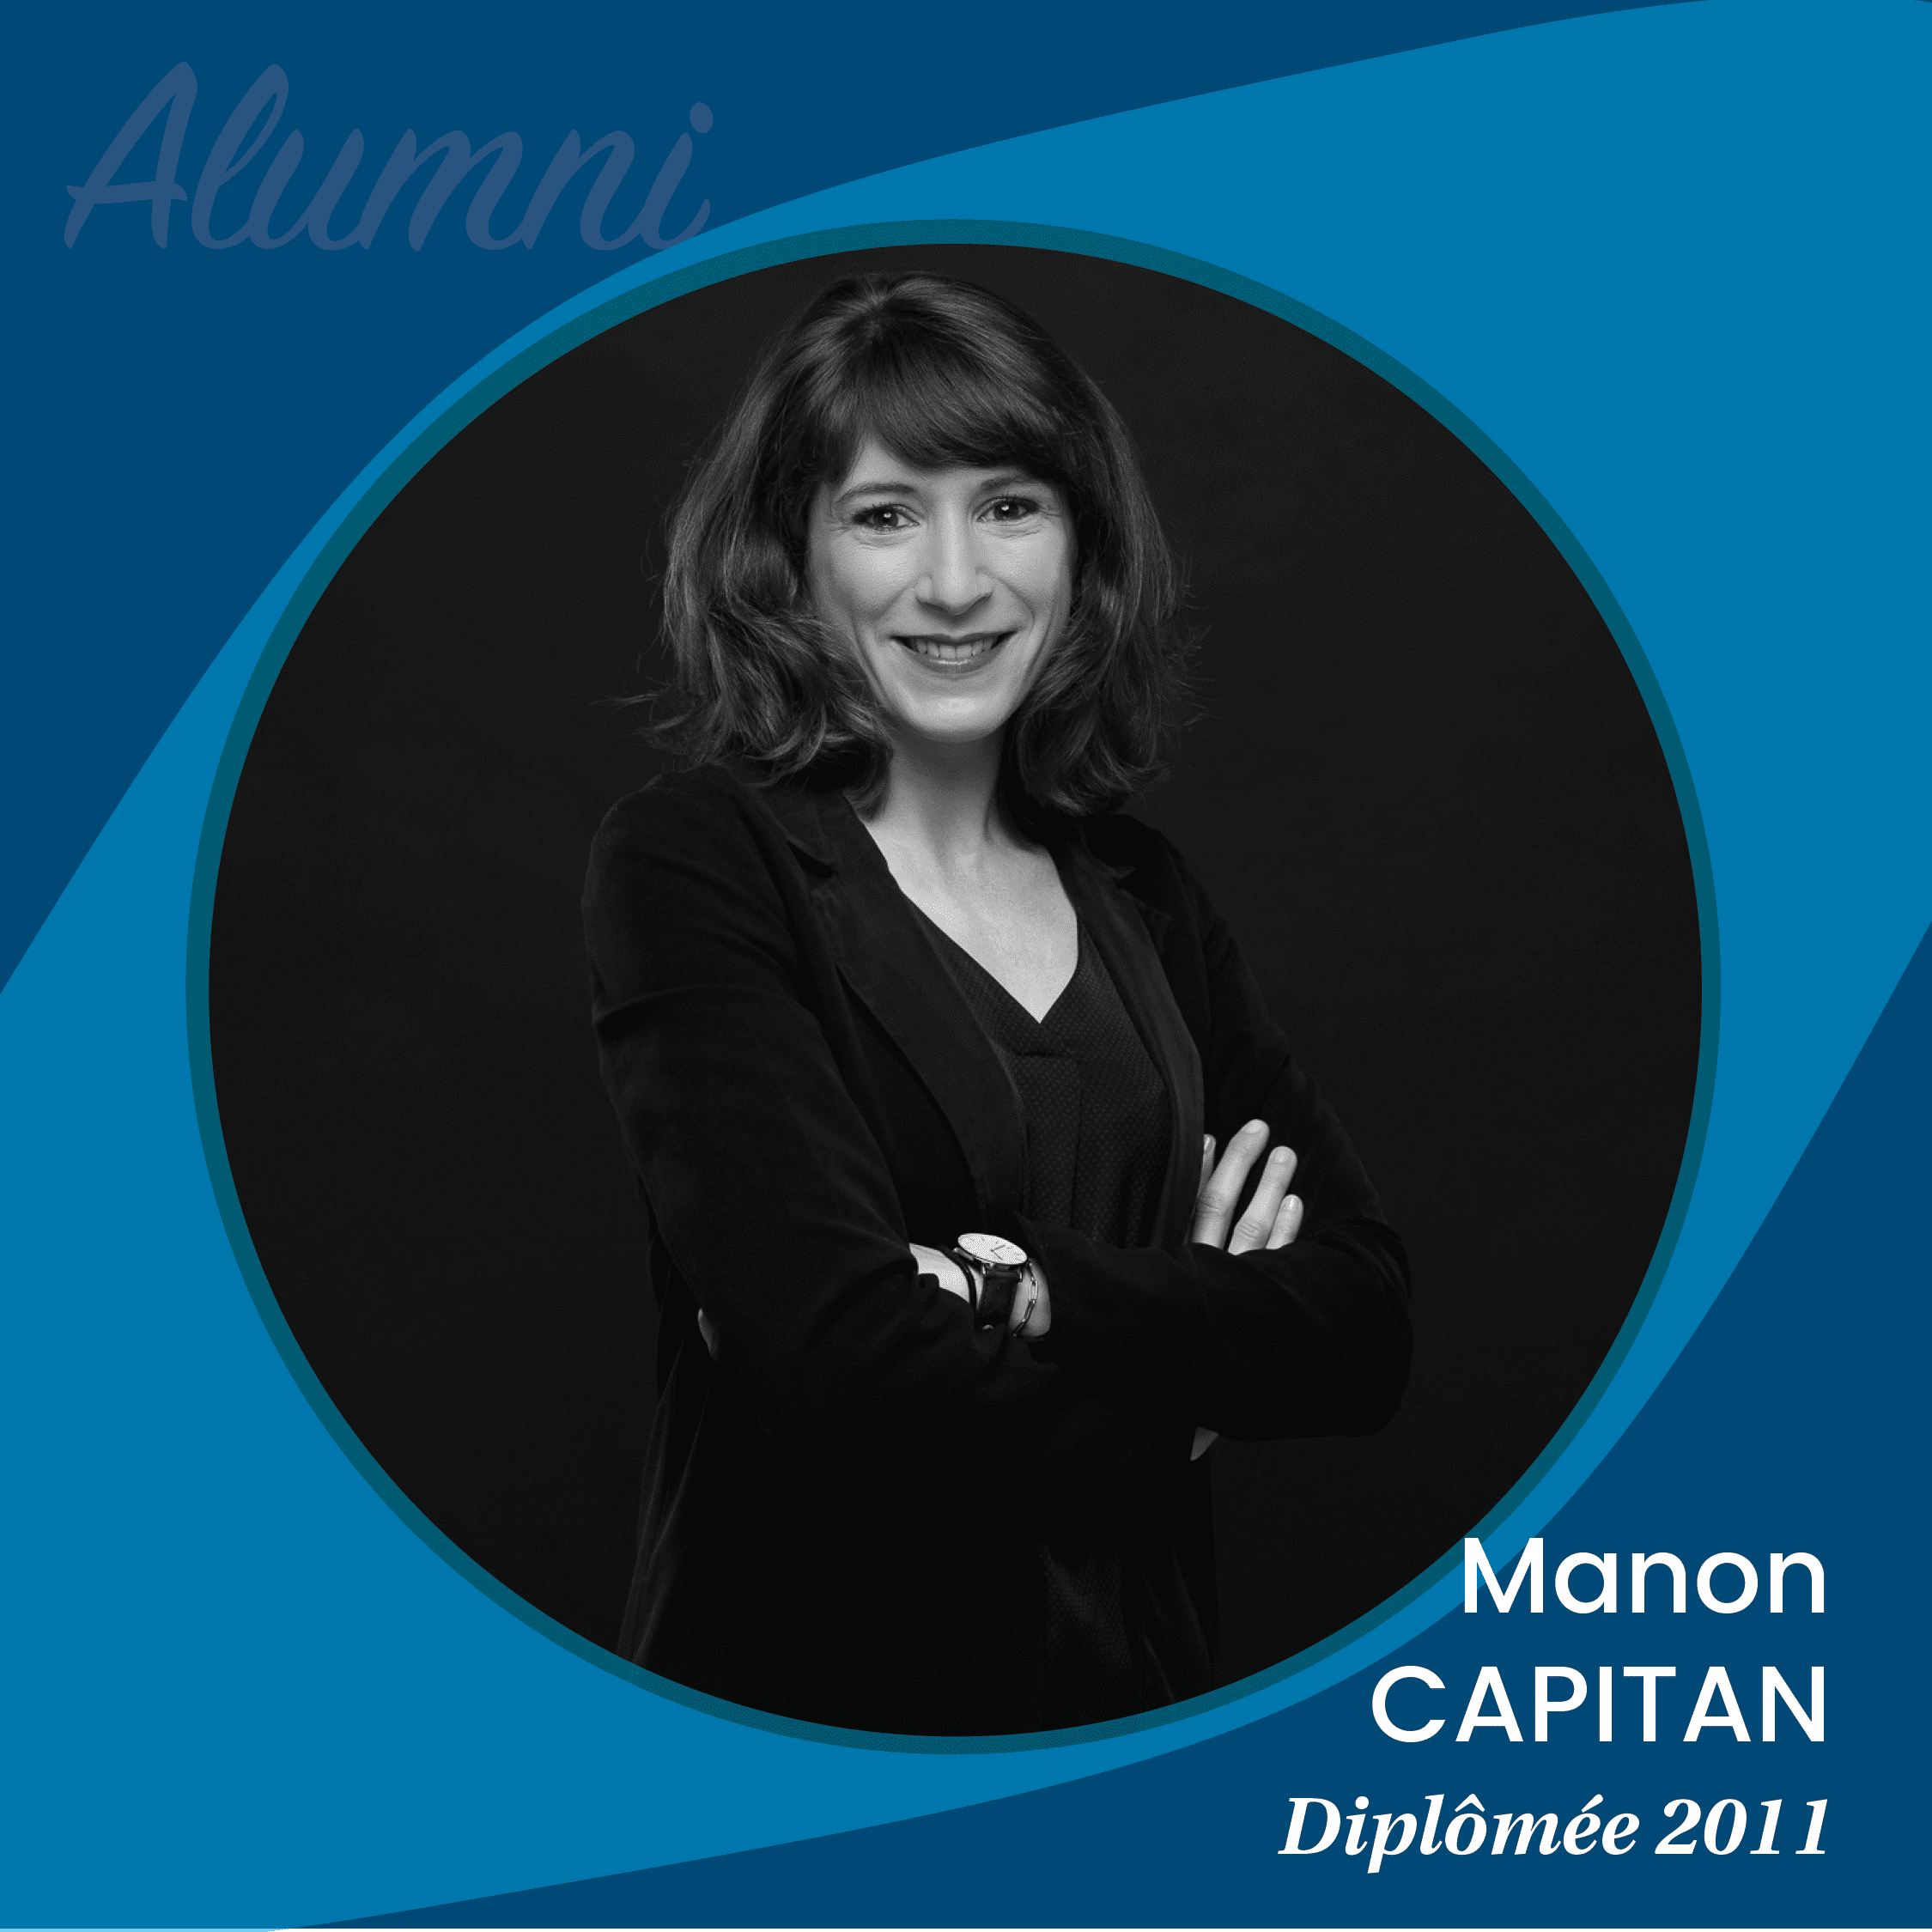 Manon Capitan